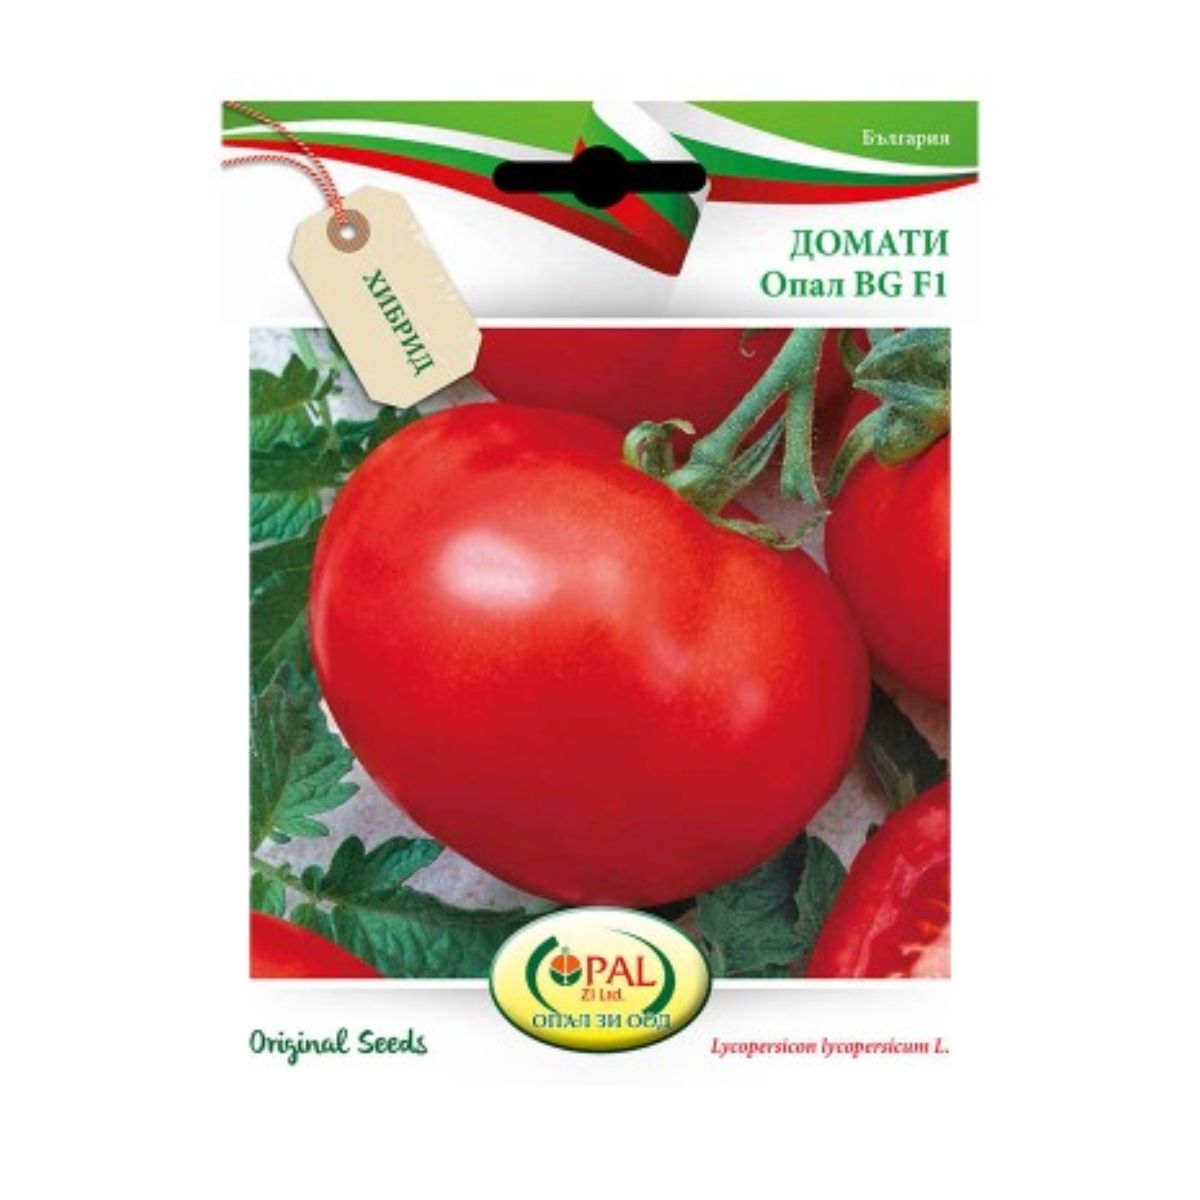 Tomate - Seminte de tomate Opal BG F1, 1 grame OPAL, hectarul.ro